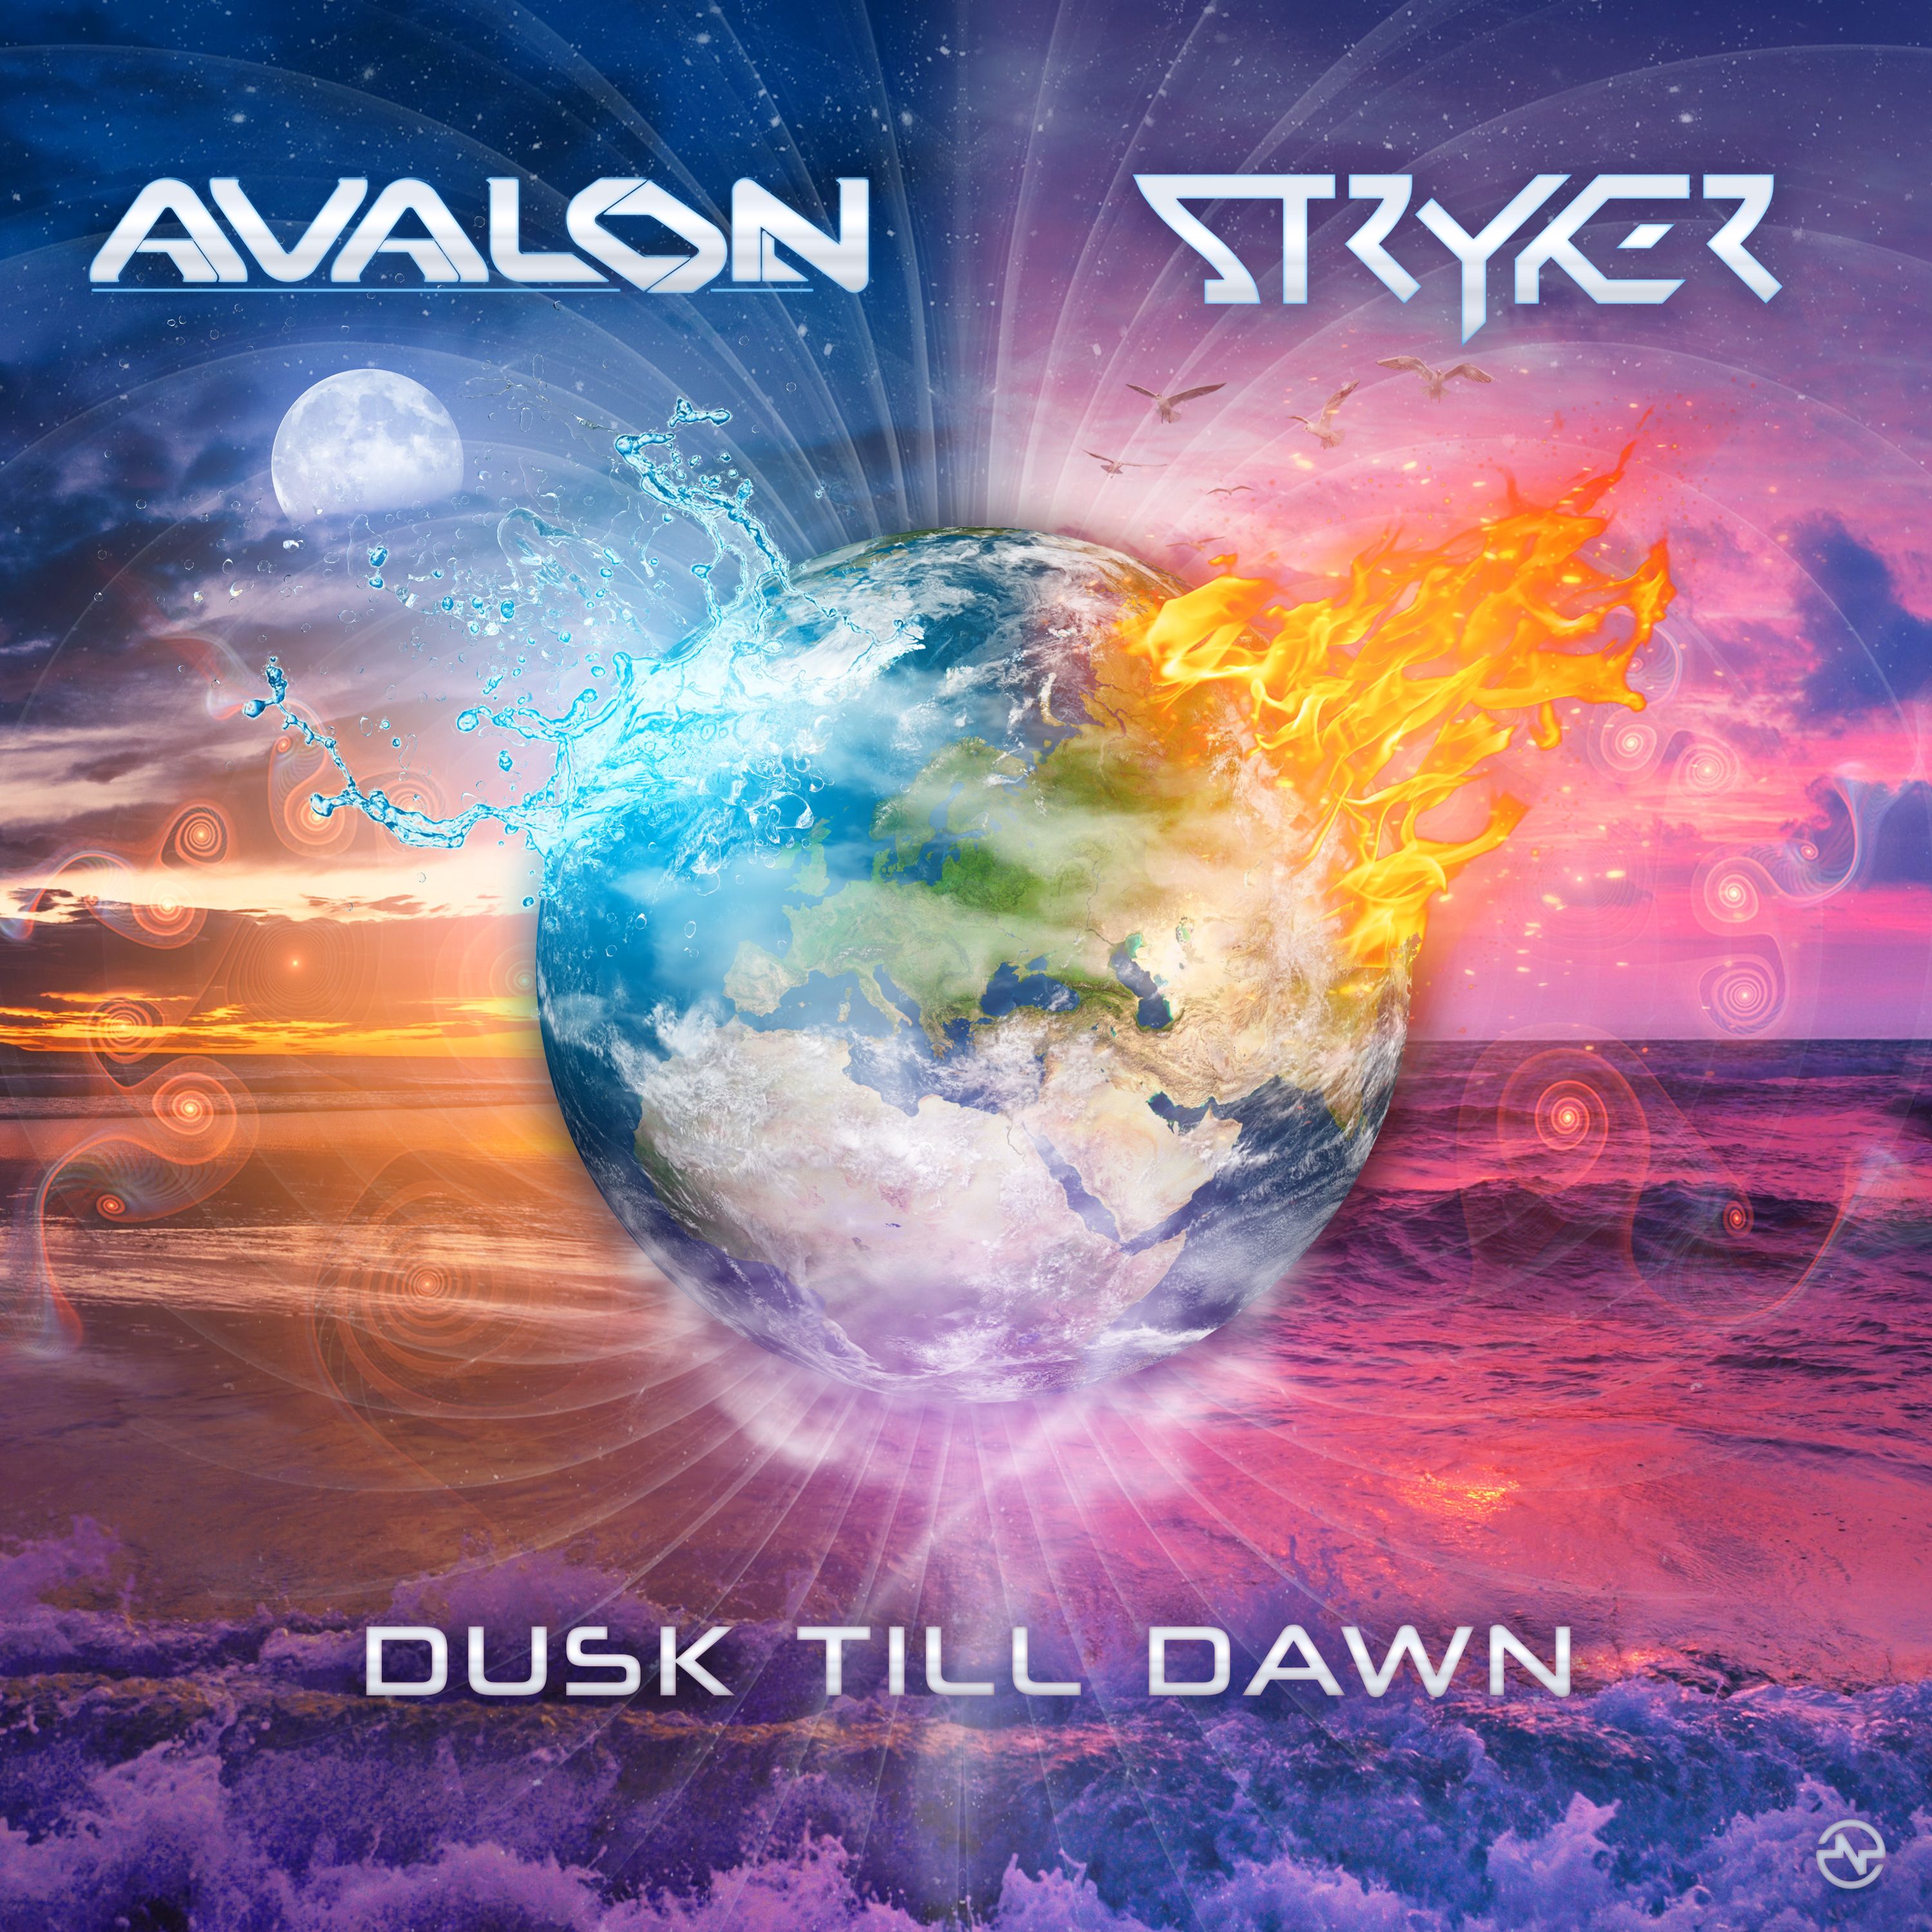 Avalon & Stryker - Dusk Till Dawn ★#1 Beatport Top 100★